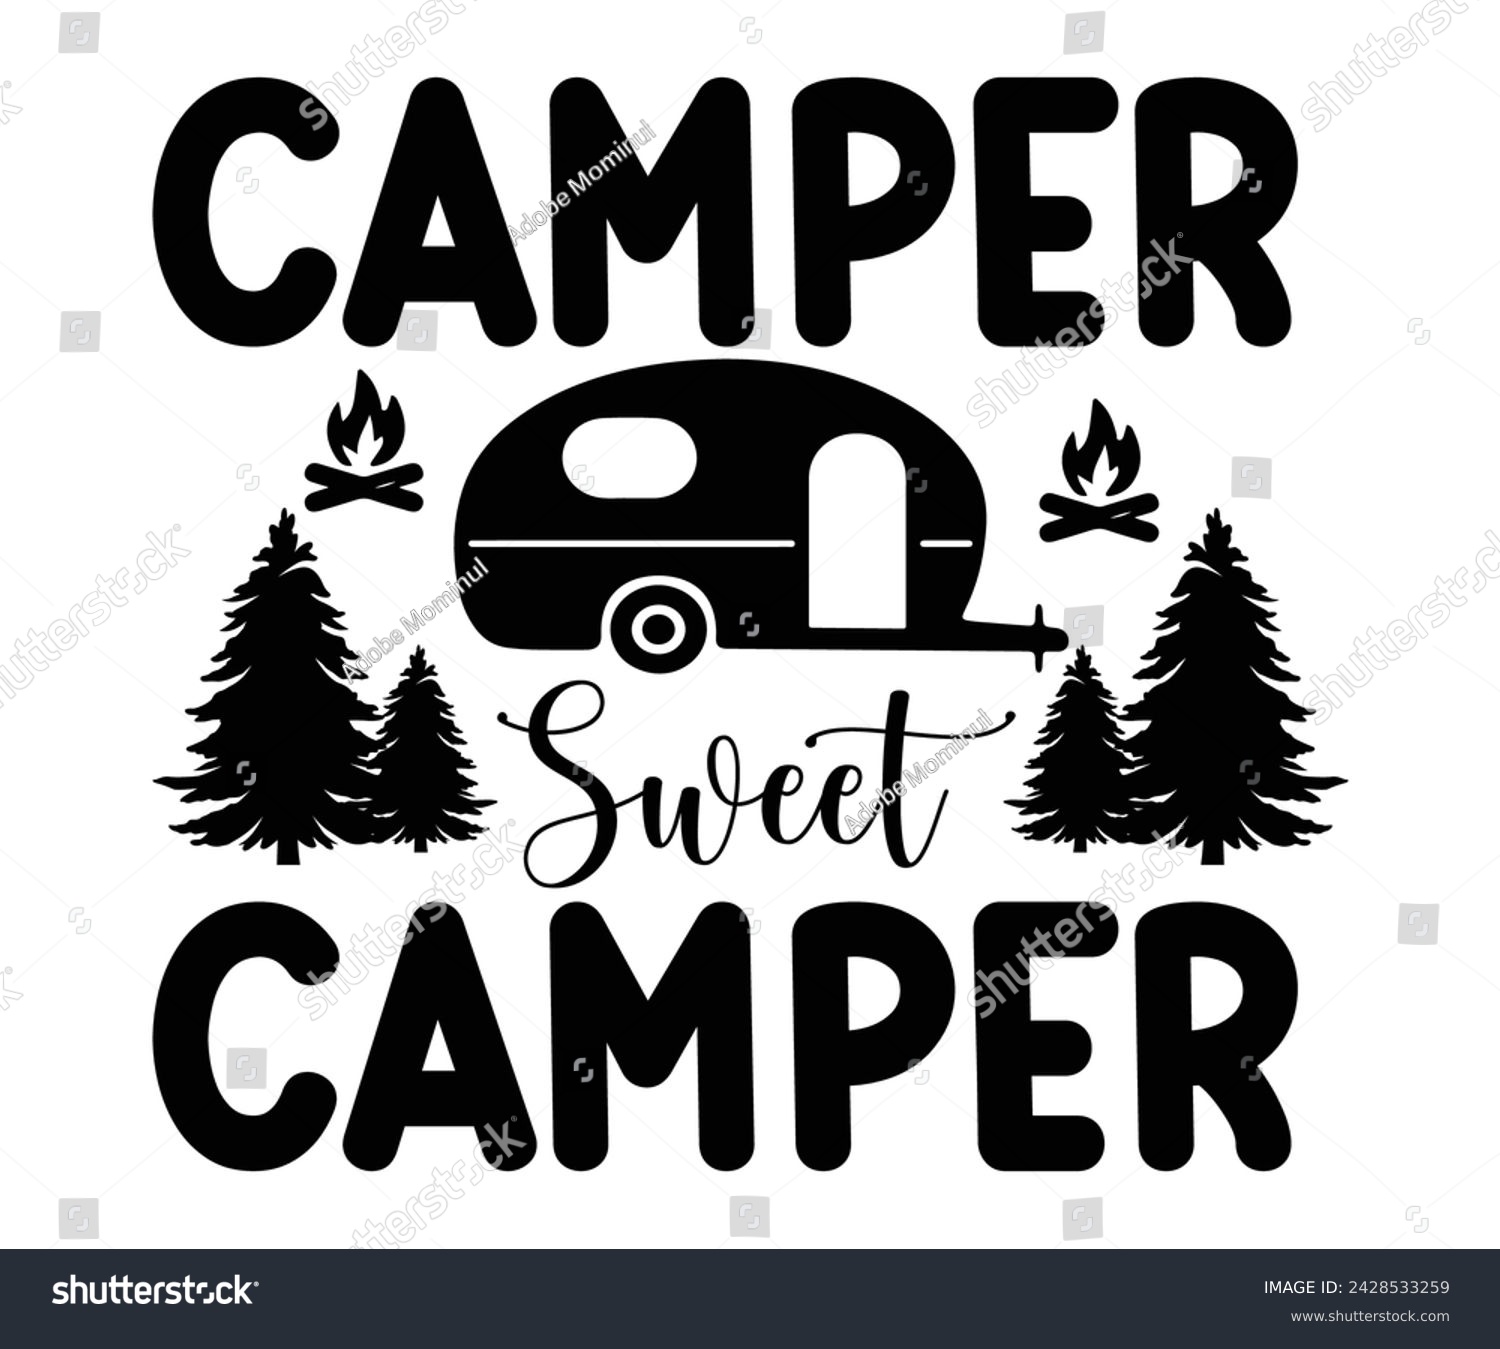 SVG of Camper Sweet Camper Svg,Retro,Happy Camper Svg,Camping Svg,Adventure Svg,Hiking Svg,Camp Saying,Camp Life Svg,Svg Cut Files, Png,Mountain T-shirt,Instant Download svg